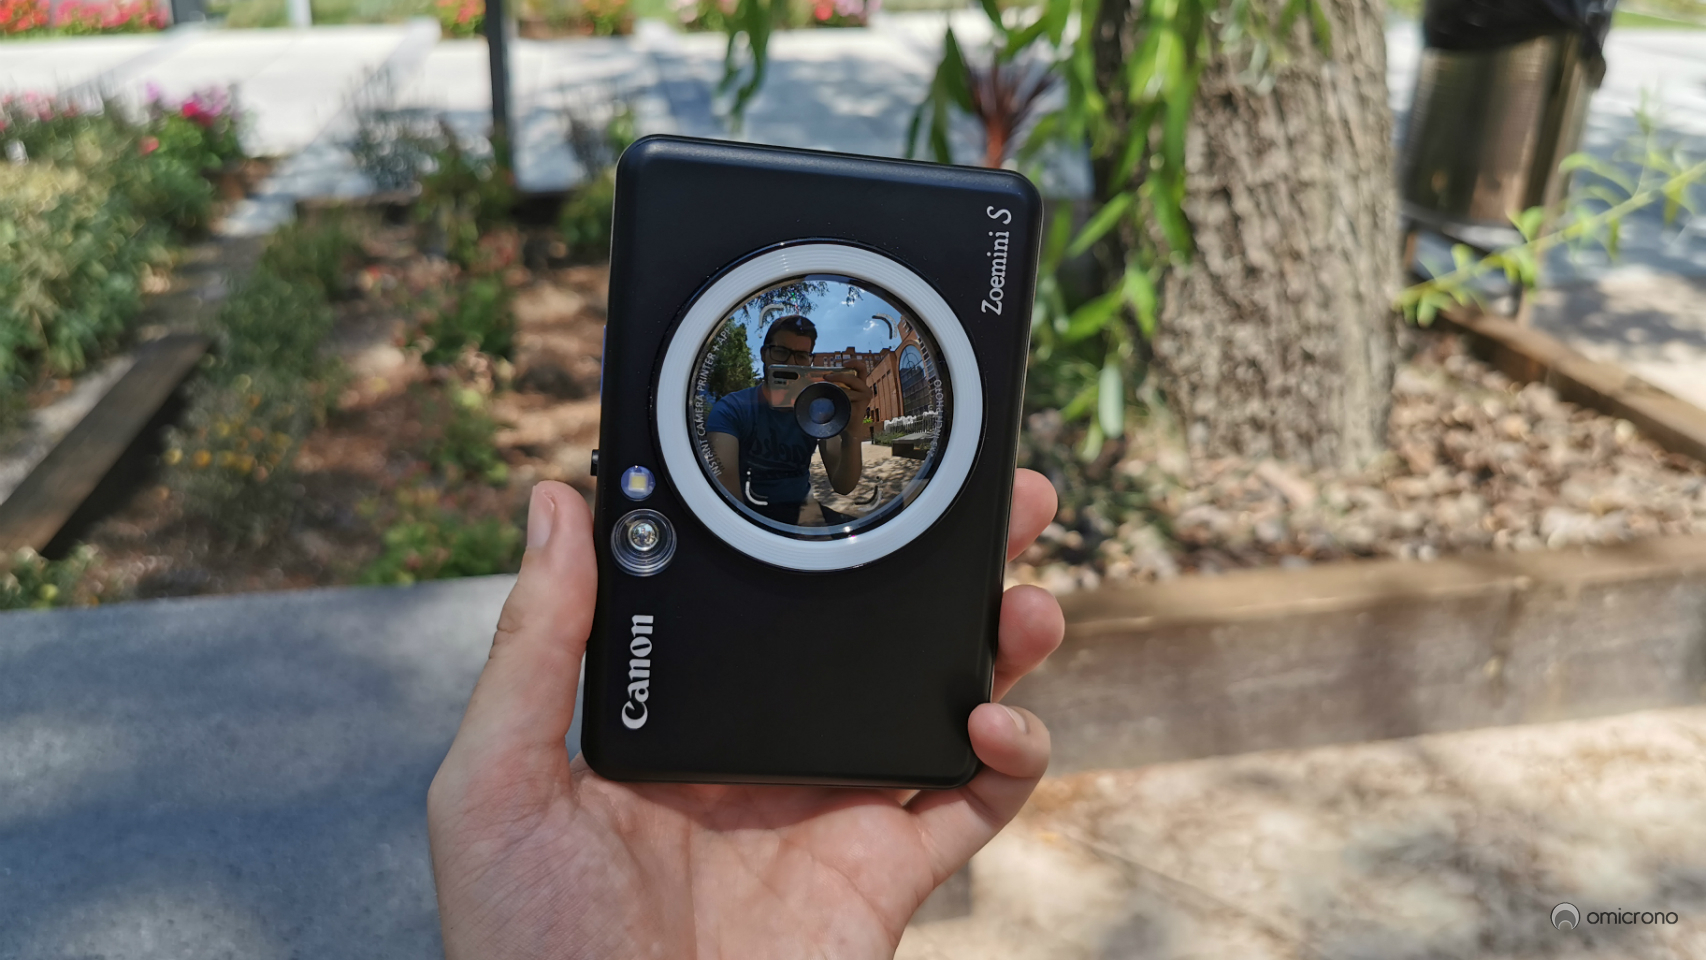 Análisis de la Canon Zoemini S: la cámara-impresora para viajeros